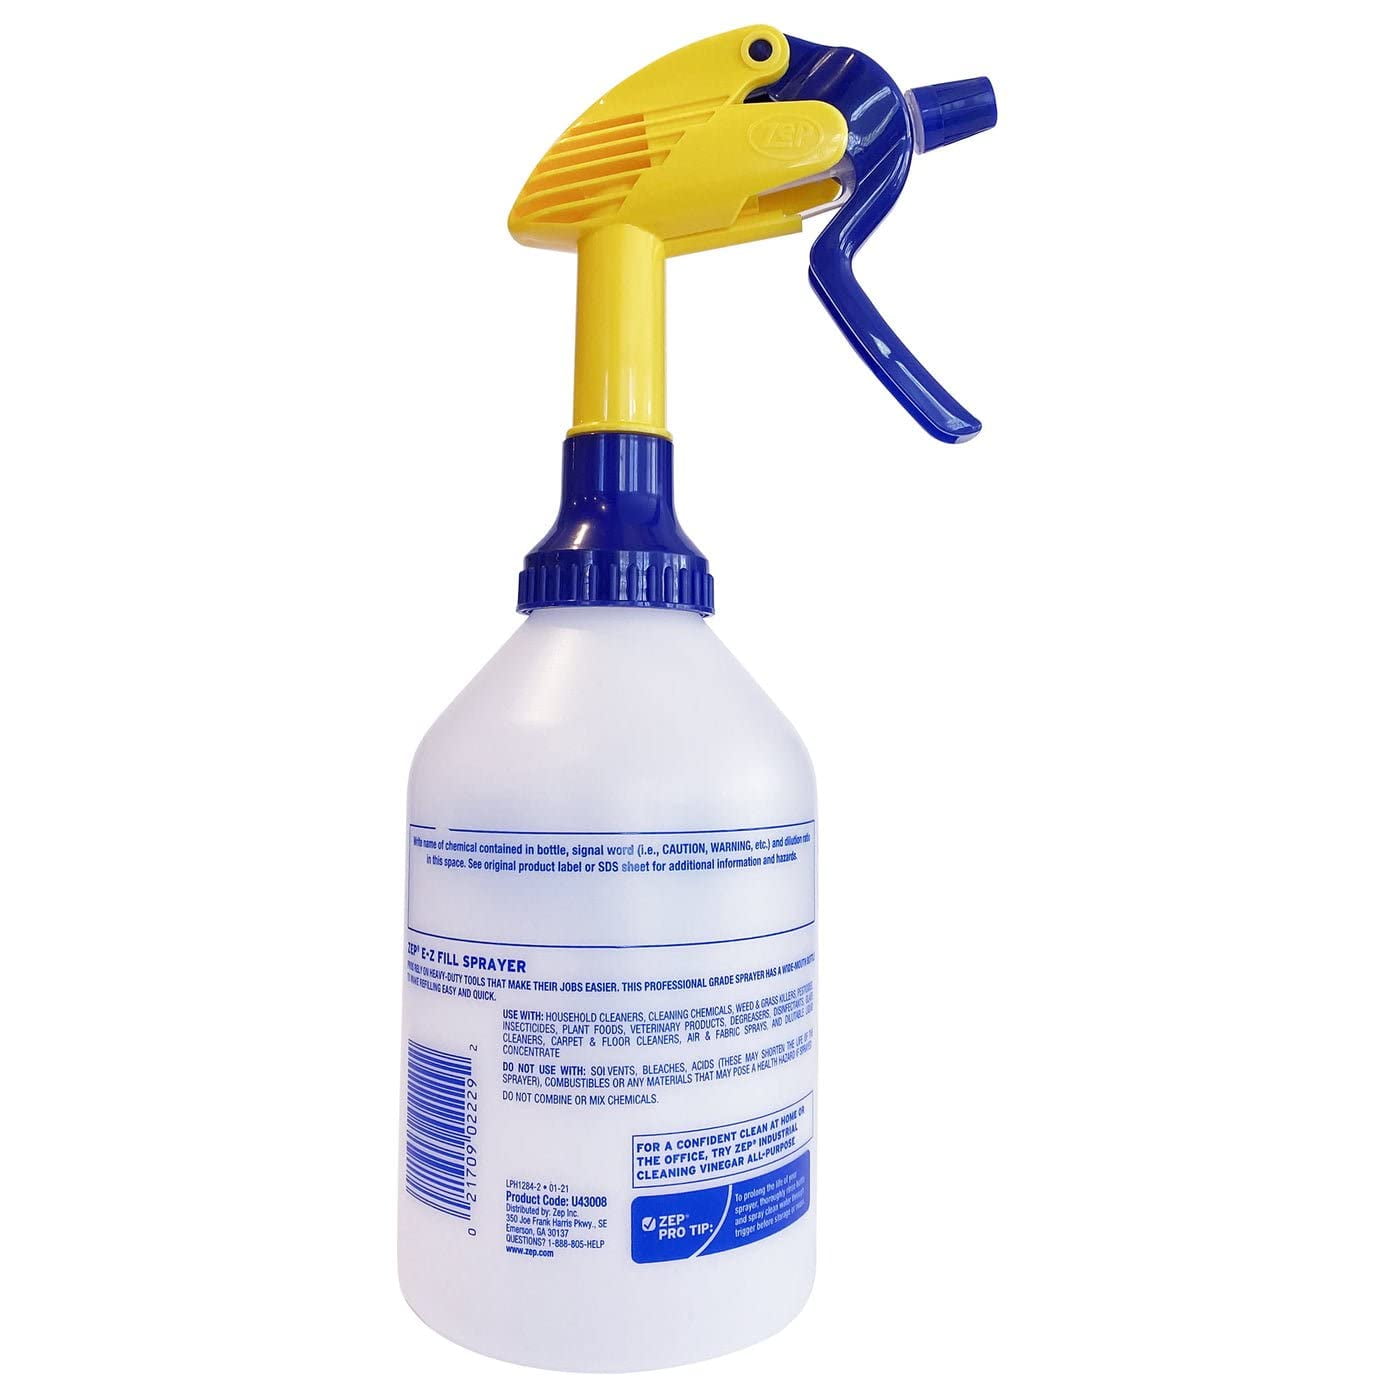 ZE1000 – 36 oz. Multi-Purpose Chemical Sprayer